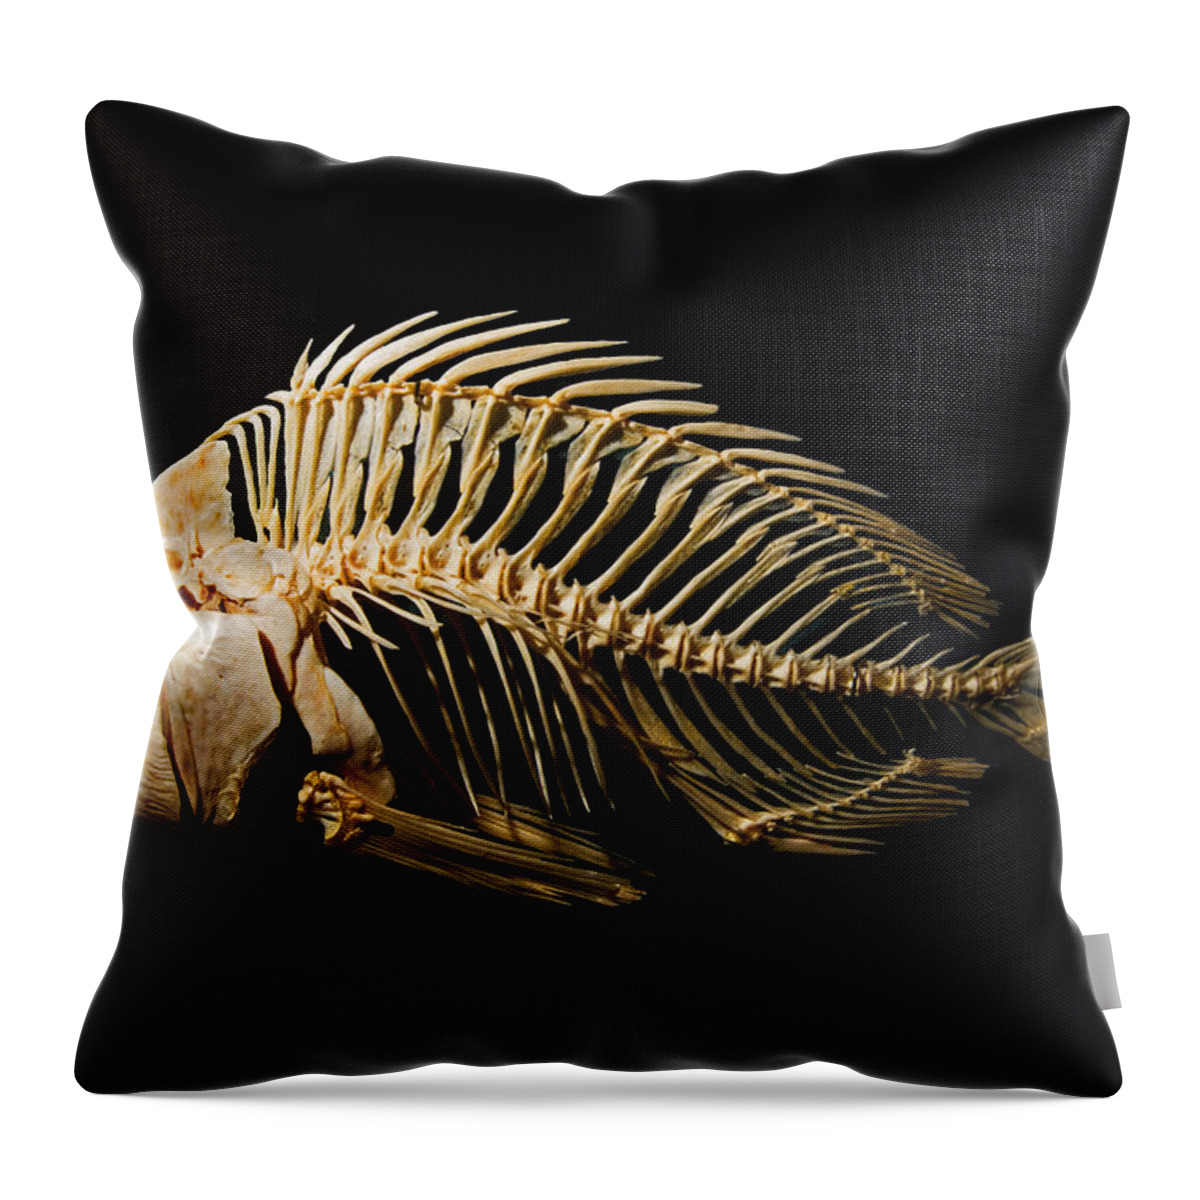 Animal Throw Pillow featuring the photograph Sheepshead Fish Skeleton by Millard H. Sharp